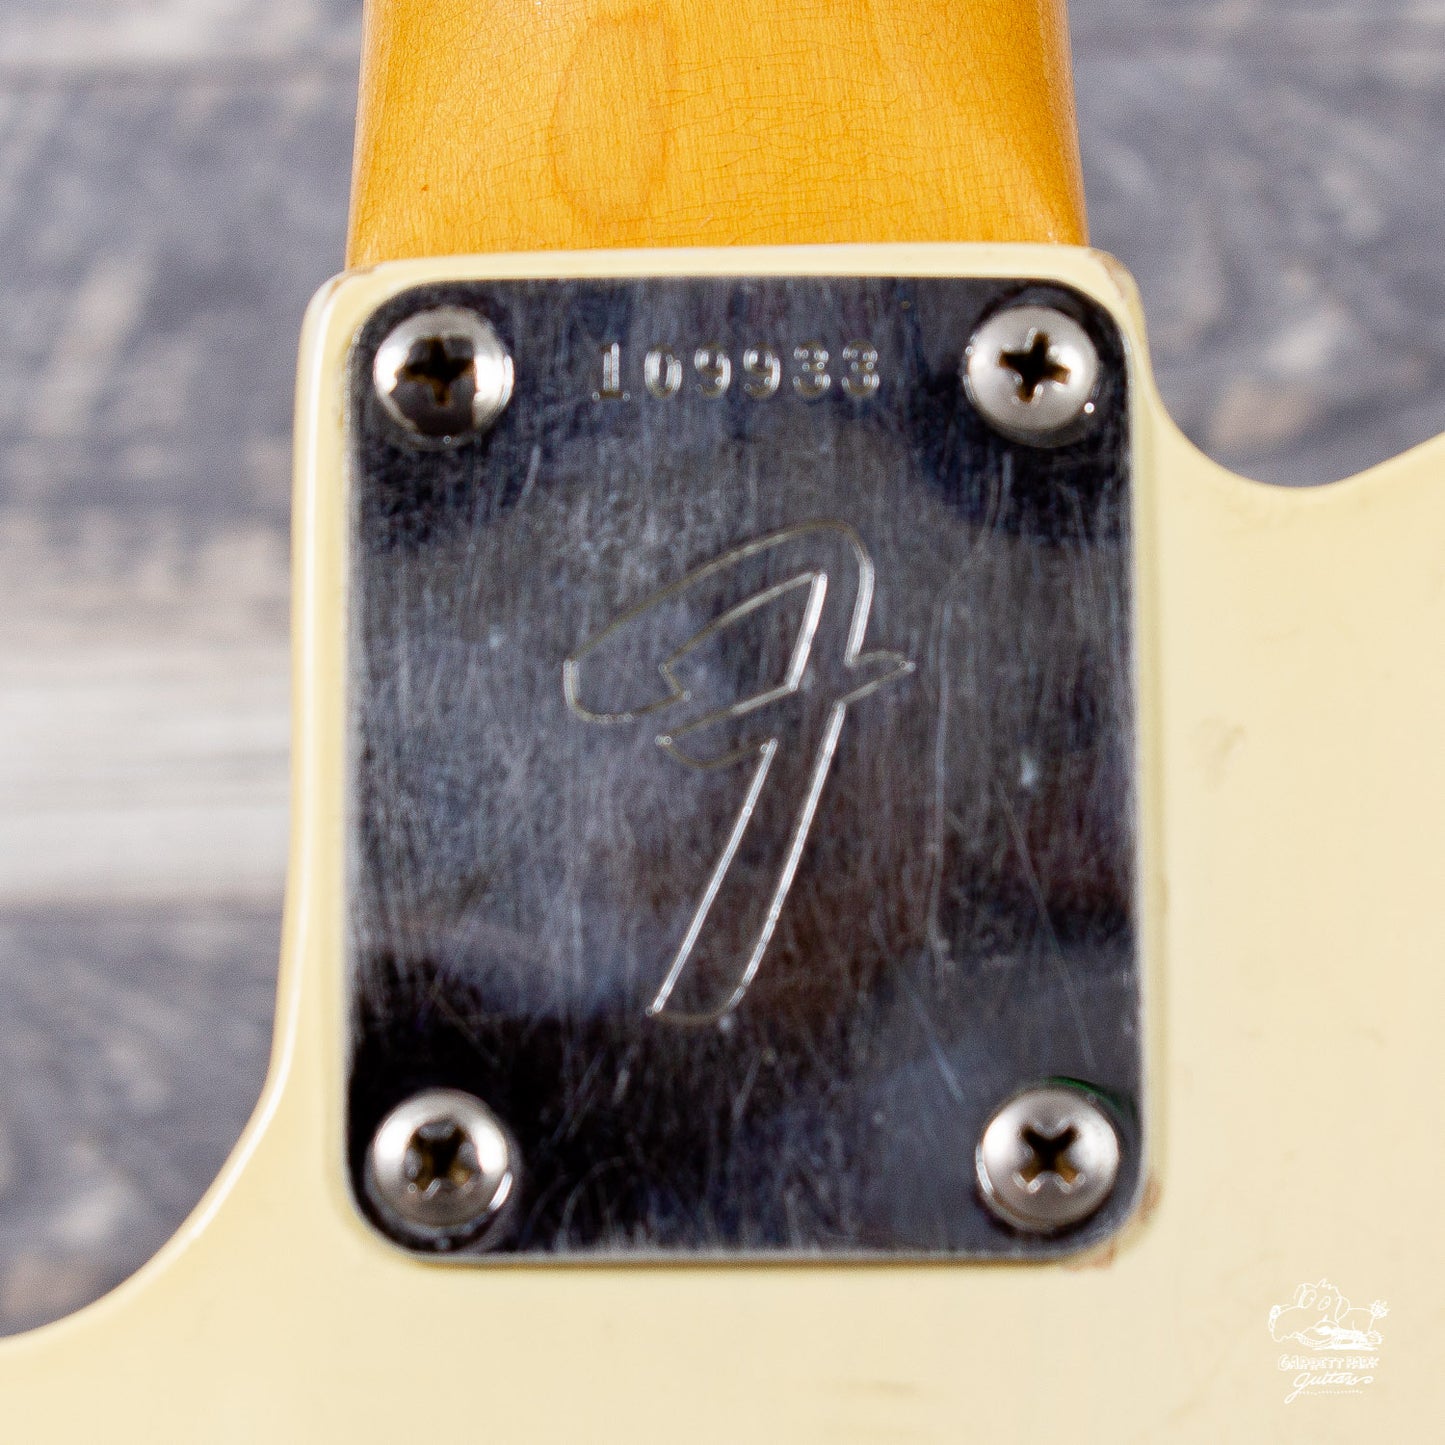 1965 Fender Telecaster - Blonde